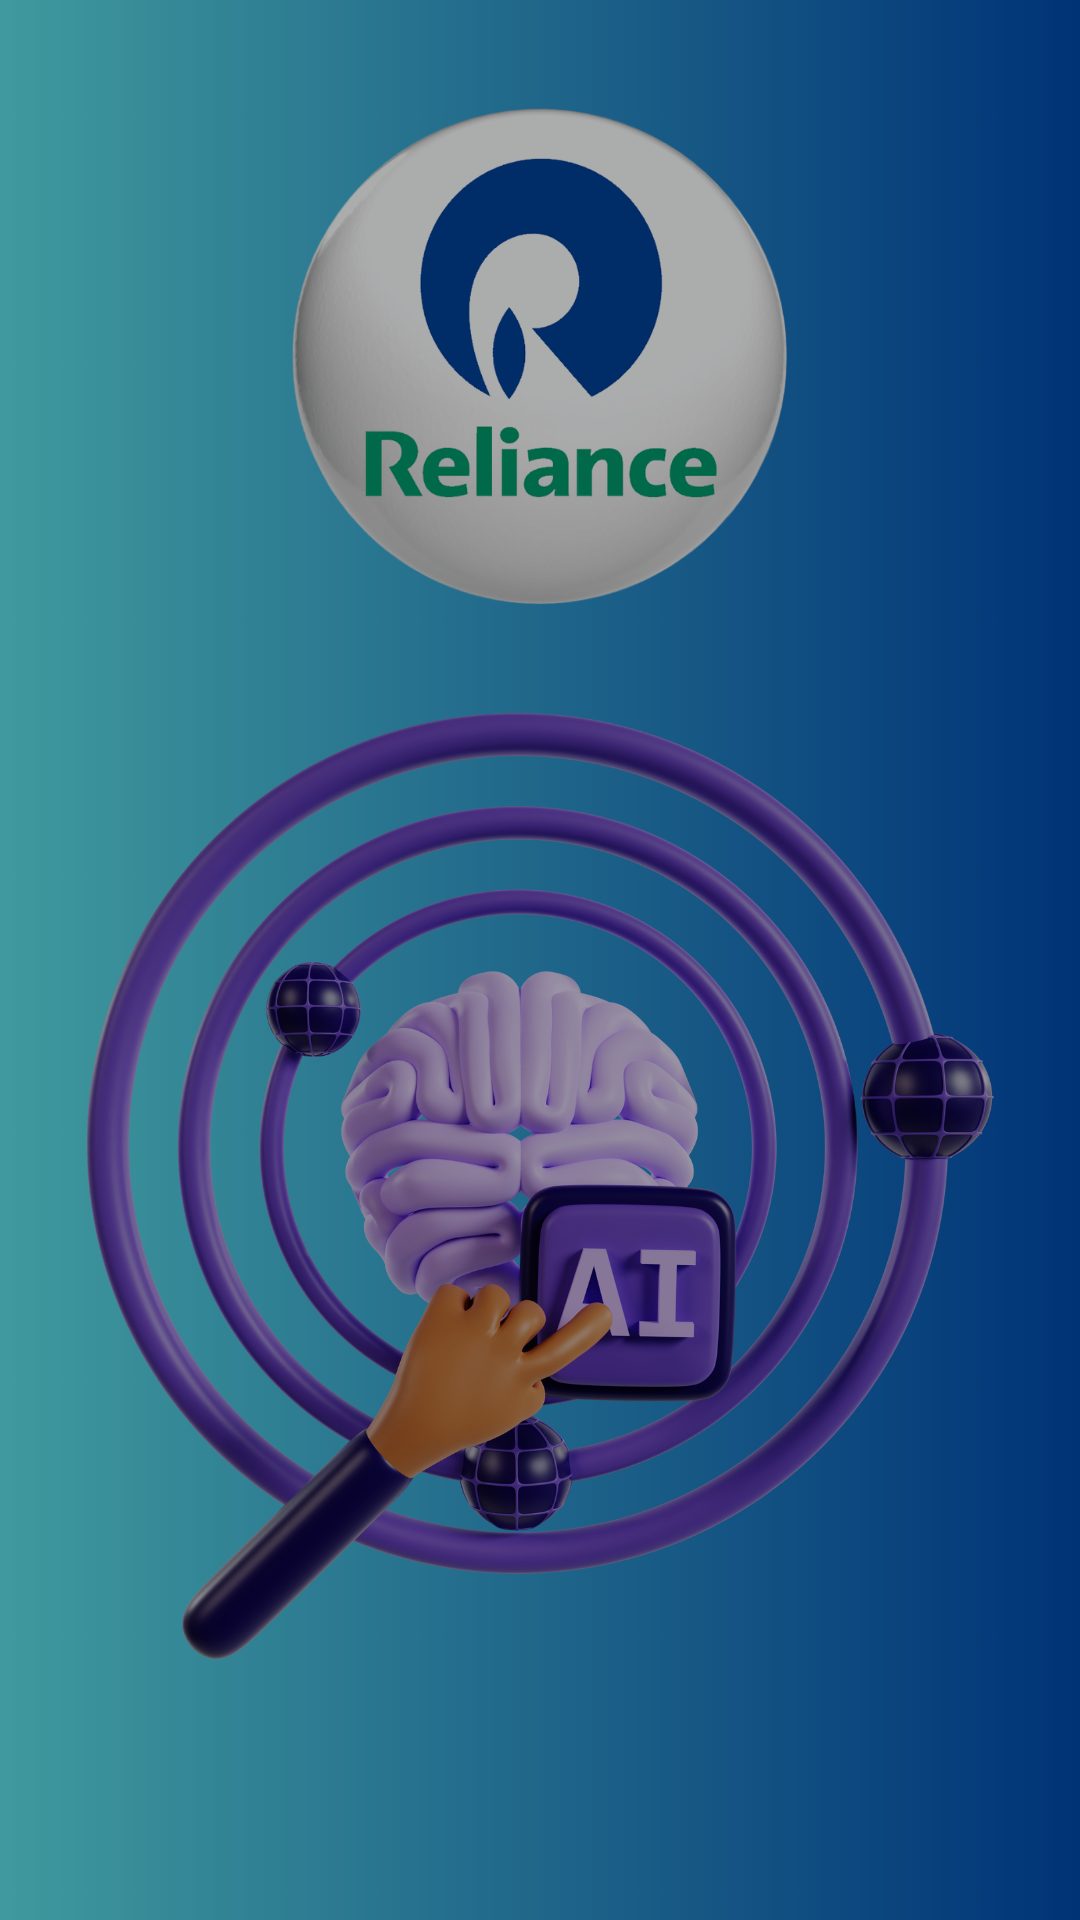 How to draw Reliance logo step by step | RELIANCE - YouTube